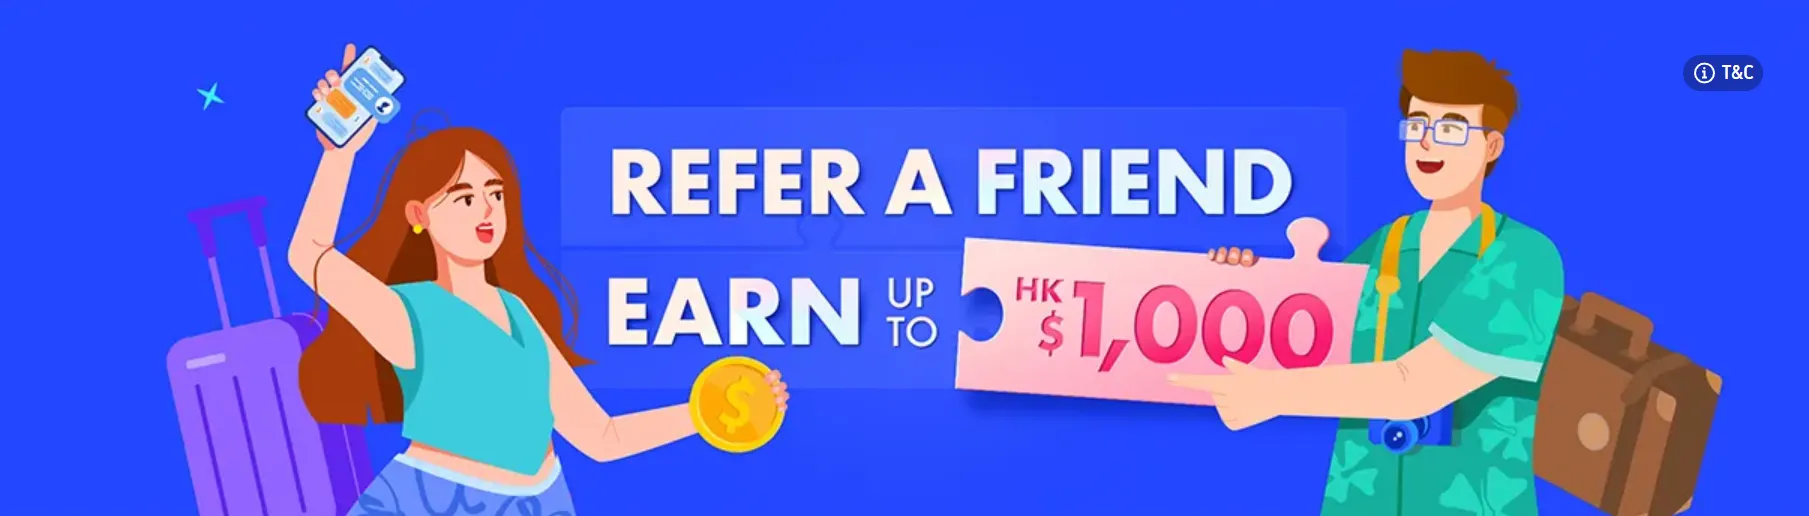 Trip.com Promo Code Hong Kong: Refer Friend Earn